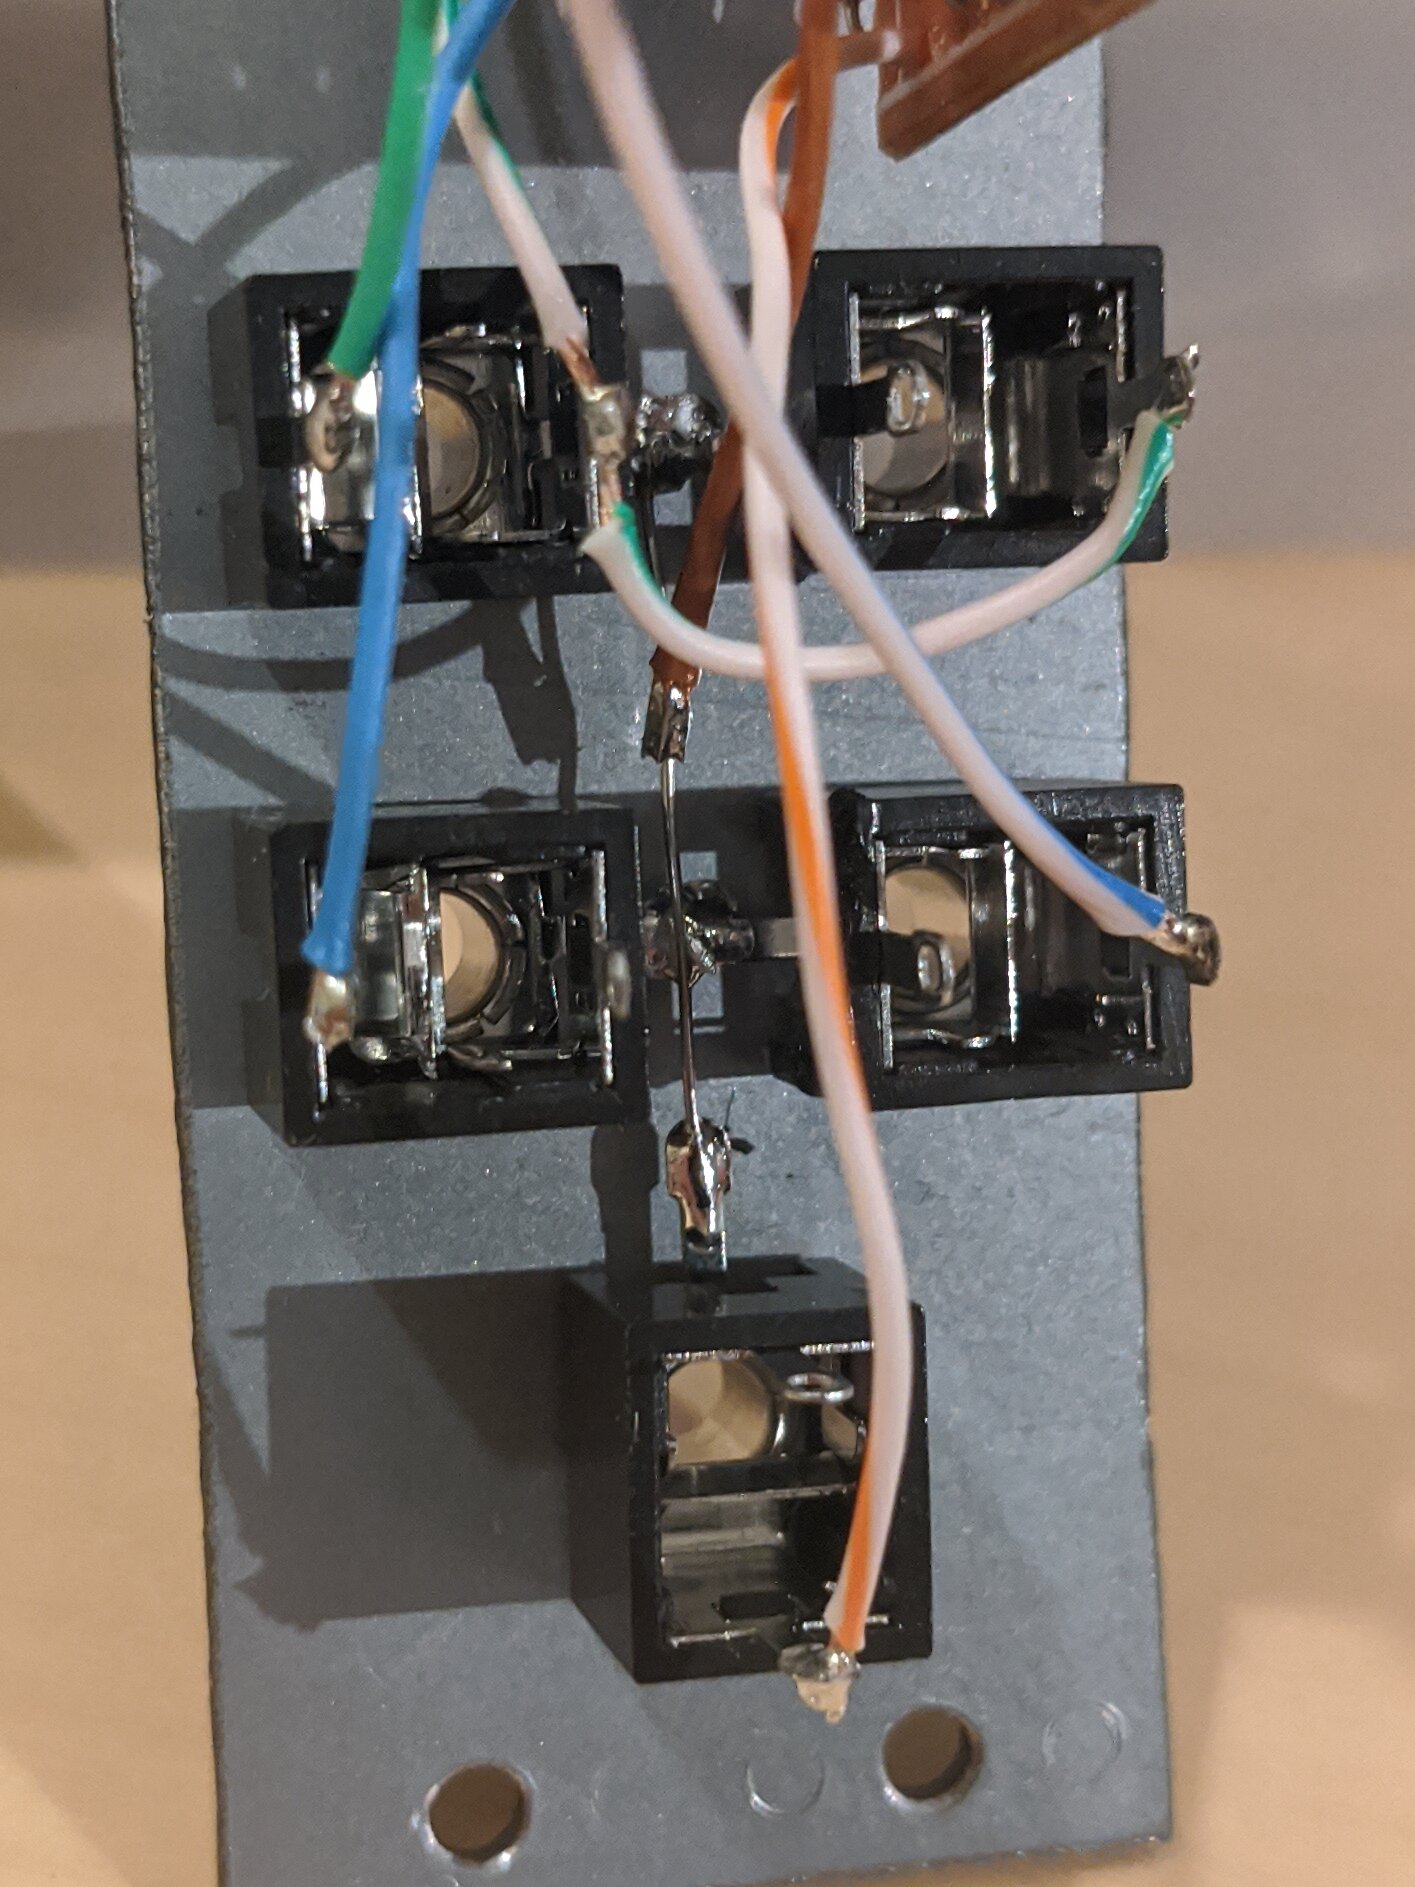 Closeup of jack sockets behind the panel